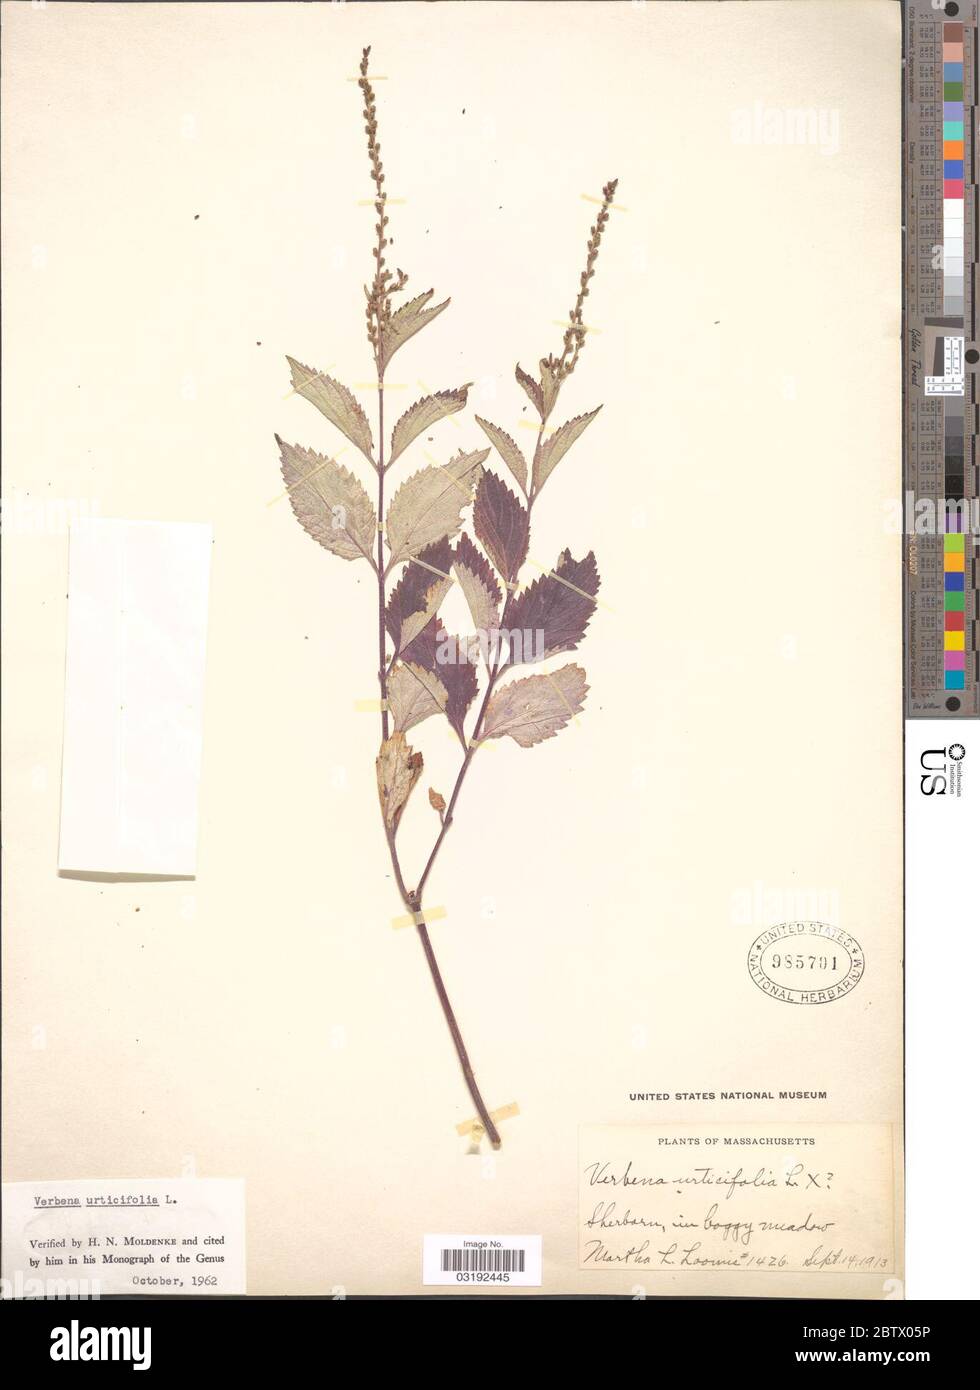 Verbena urticifolia L. Stock Photo